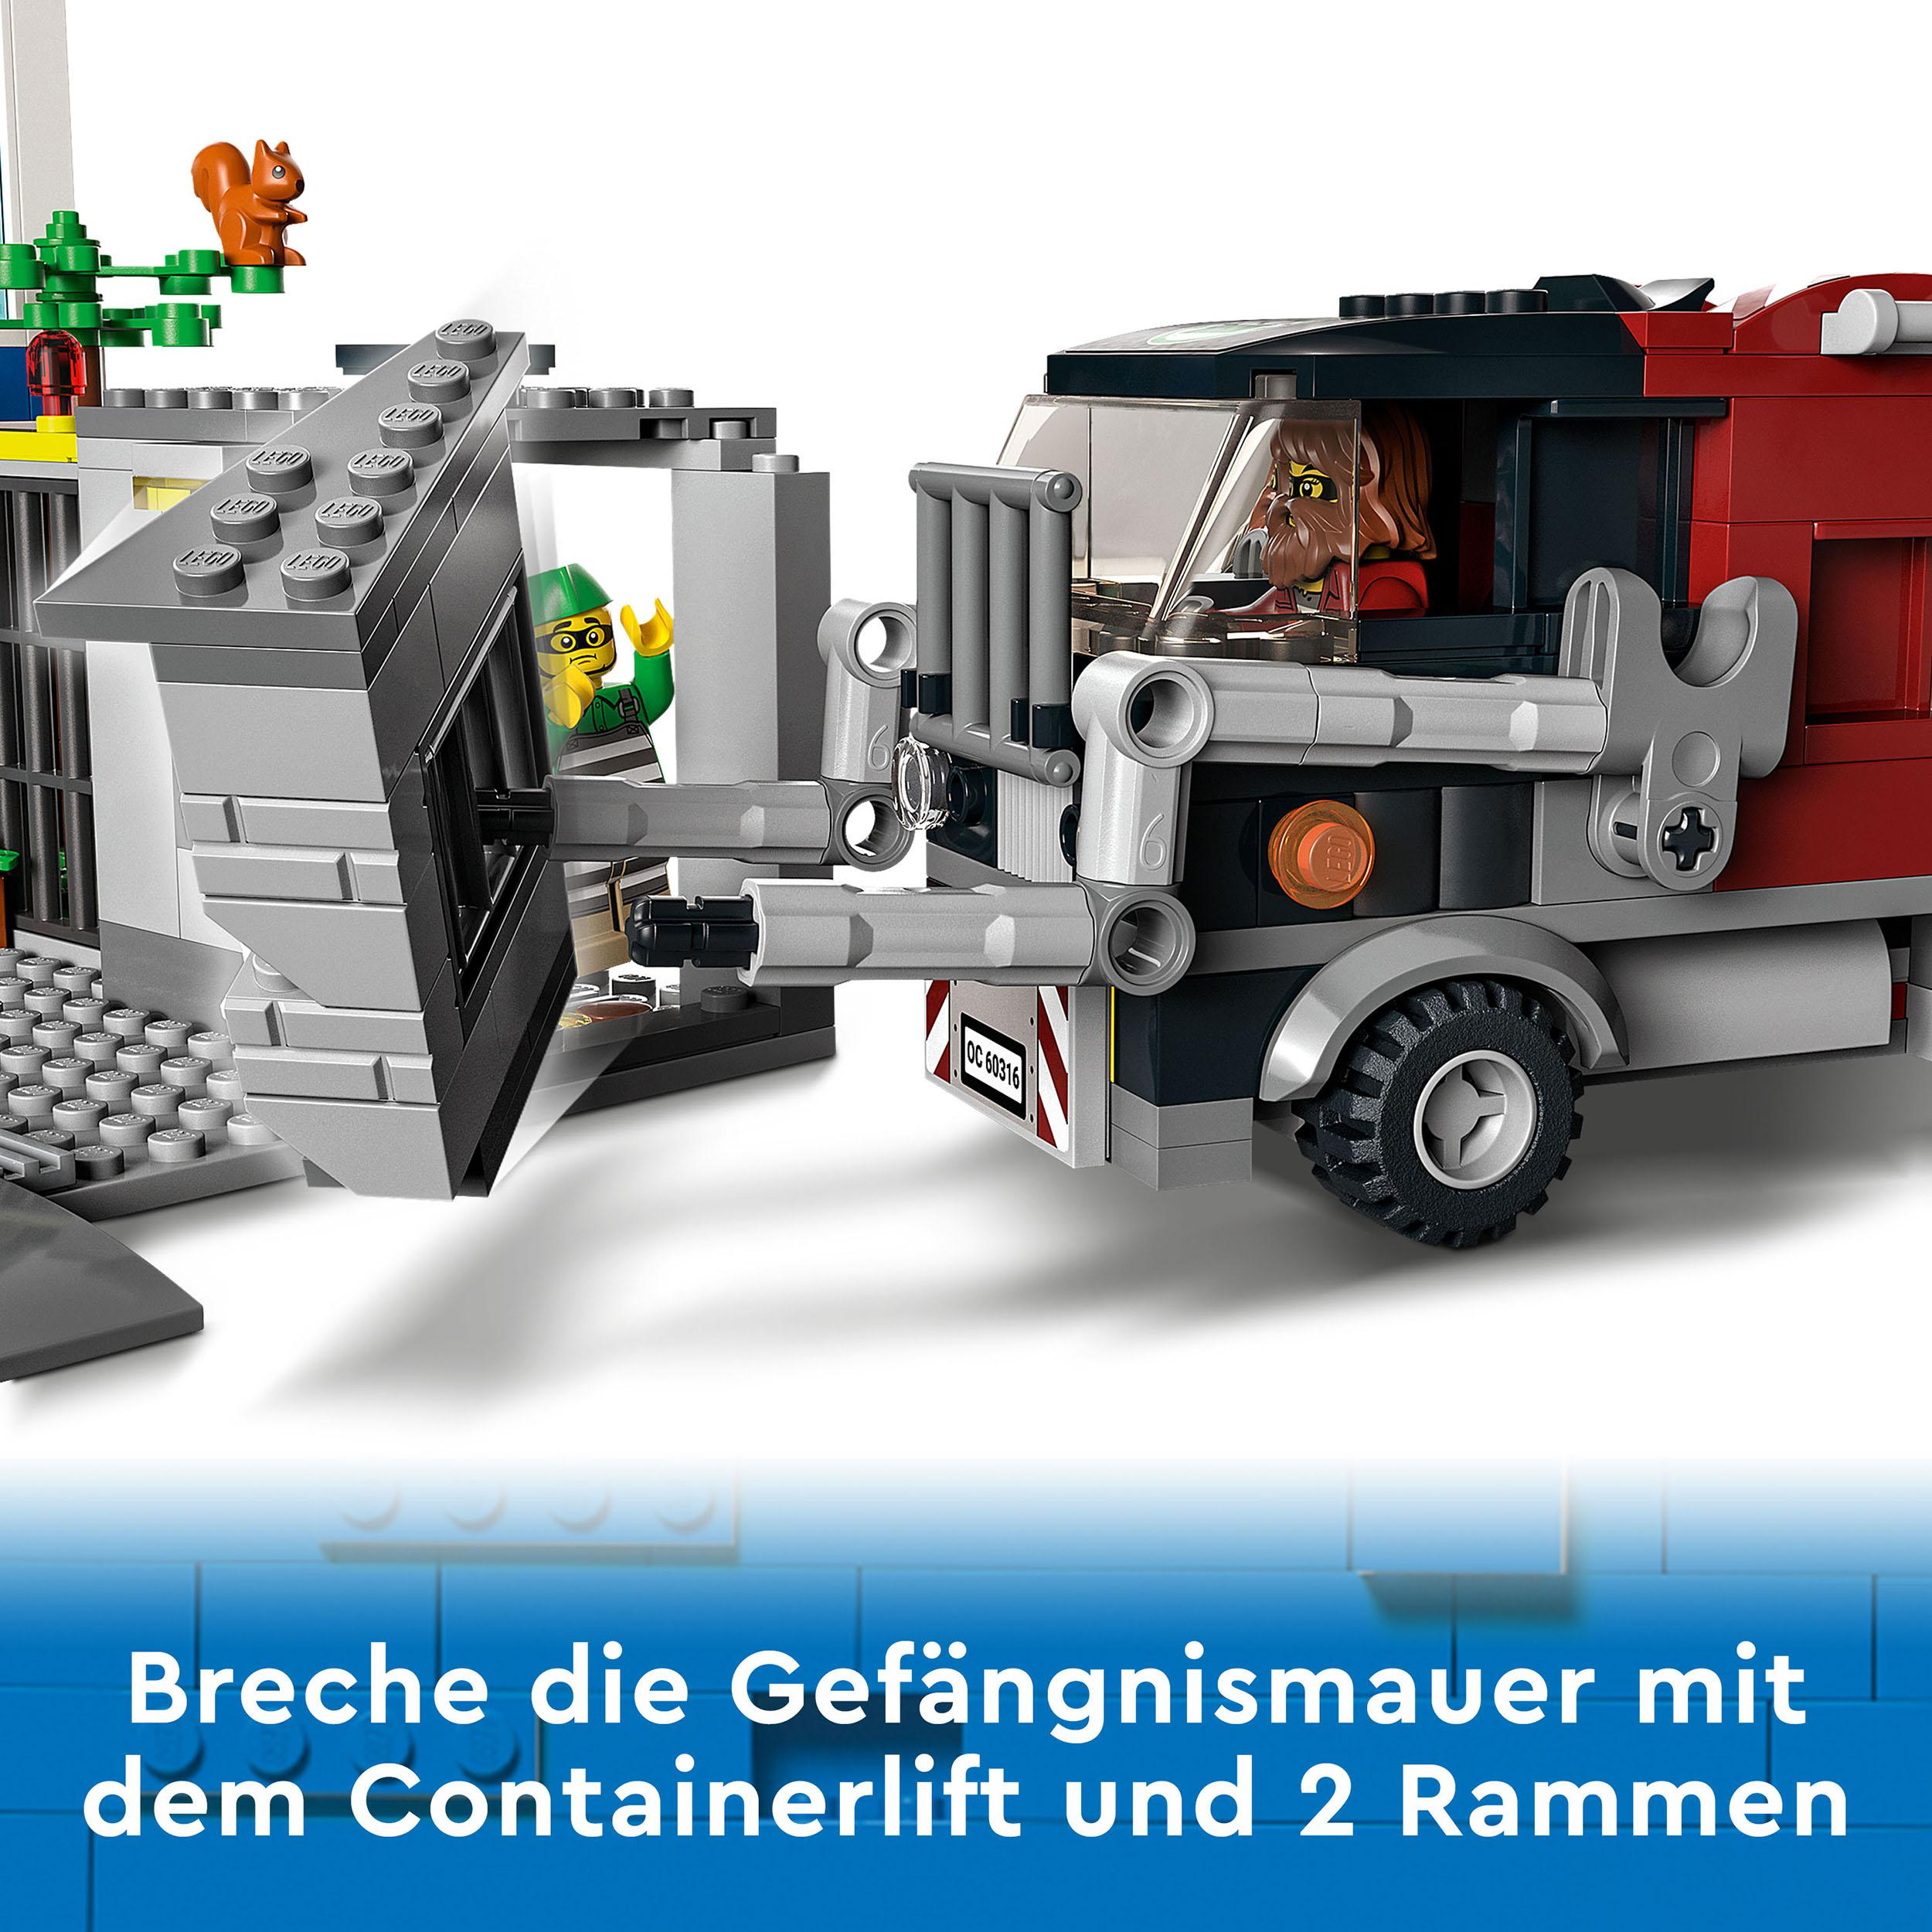 City 60316 Mehrfarbig Polizeistation LEGO Bausatz,